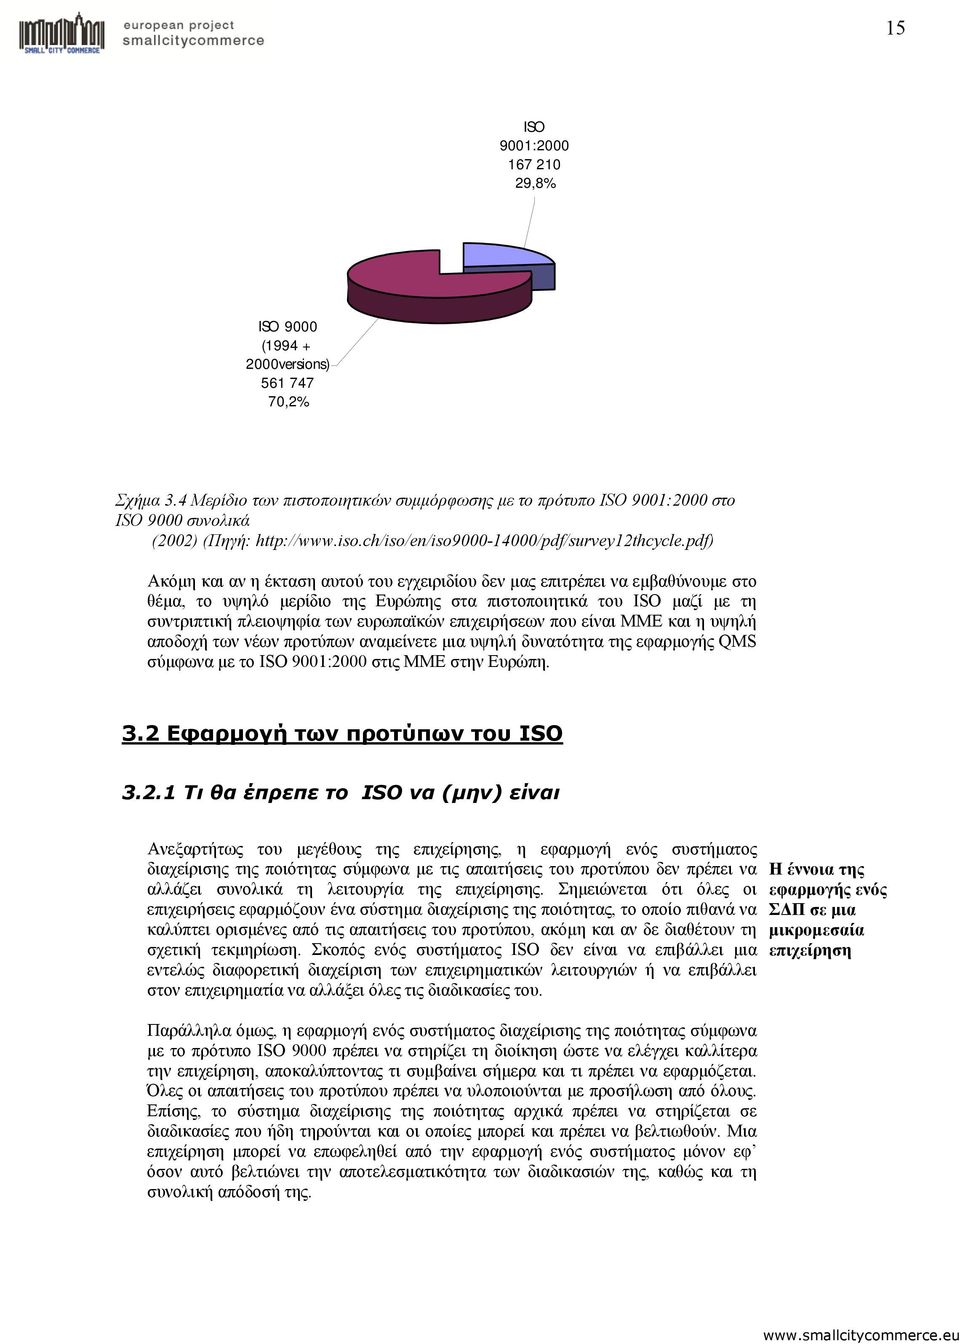 pdf) Ακόμη και αν η έκταση αυτού του εγχειριδίου δεν μας επιτρέπει να εμβαθύνουμε στο θέμα, το υψηλό μερίδιο της Ευρώπης στα πιστοποιητικά του ISO μαζί με τη συντριπτική πλειοψηφία των ευρωπαϊκών